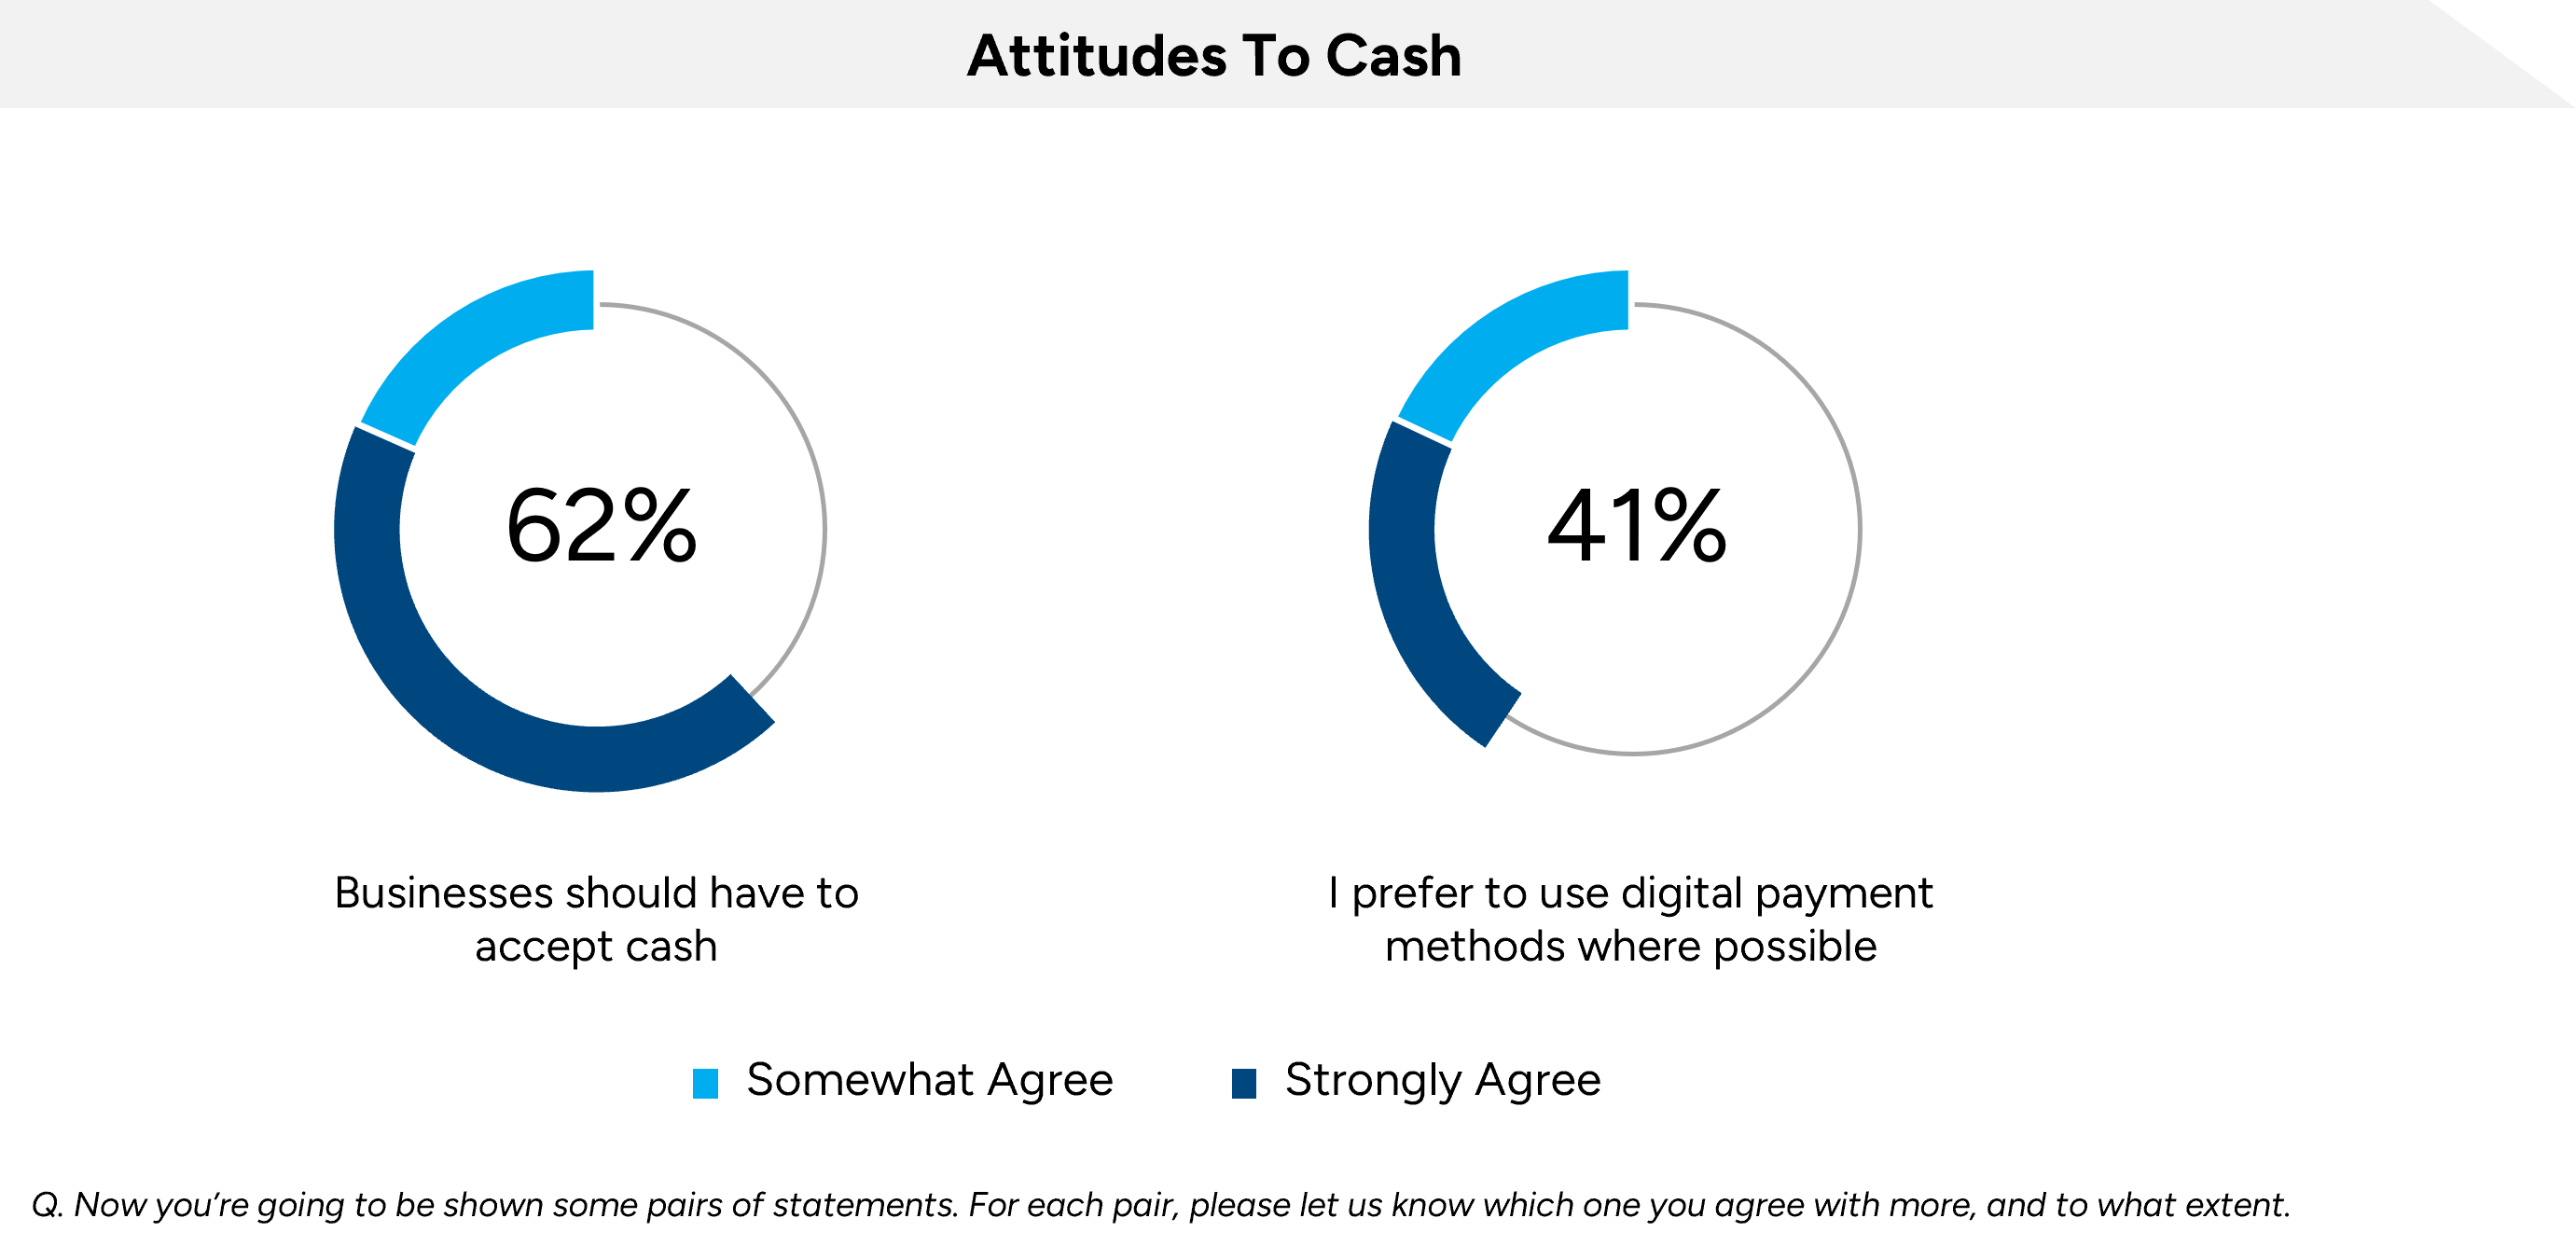 from bills to bytes: Australia's cashless conundrum - Attitudes to cash